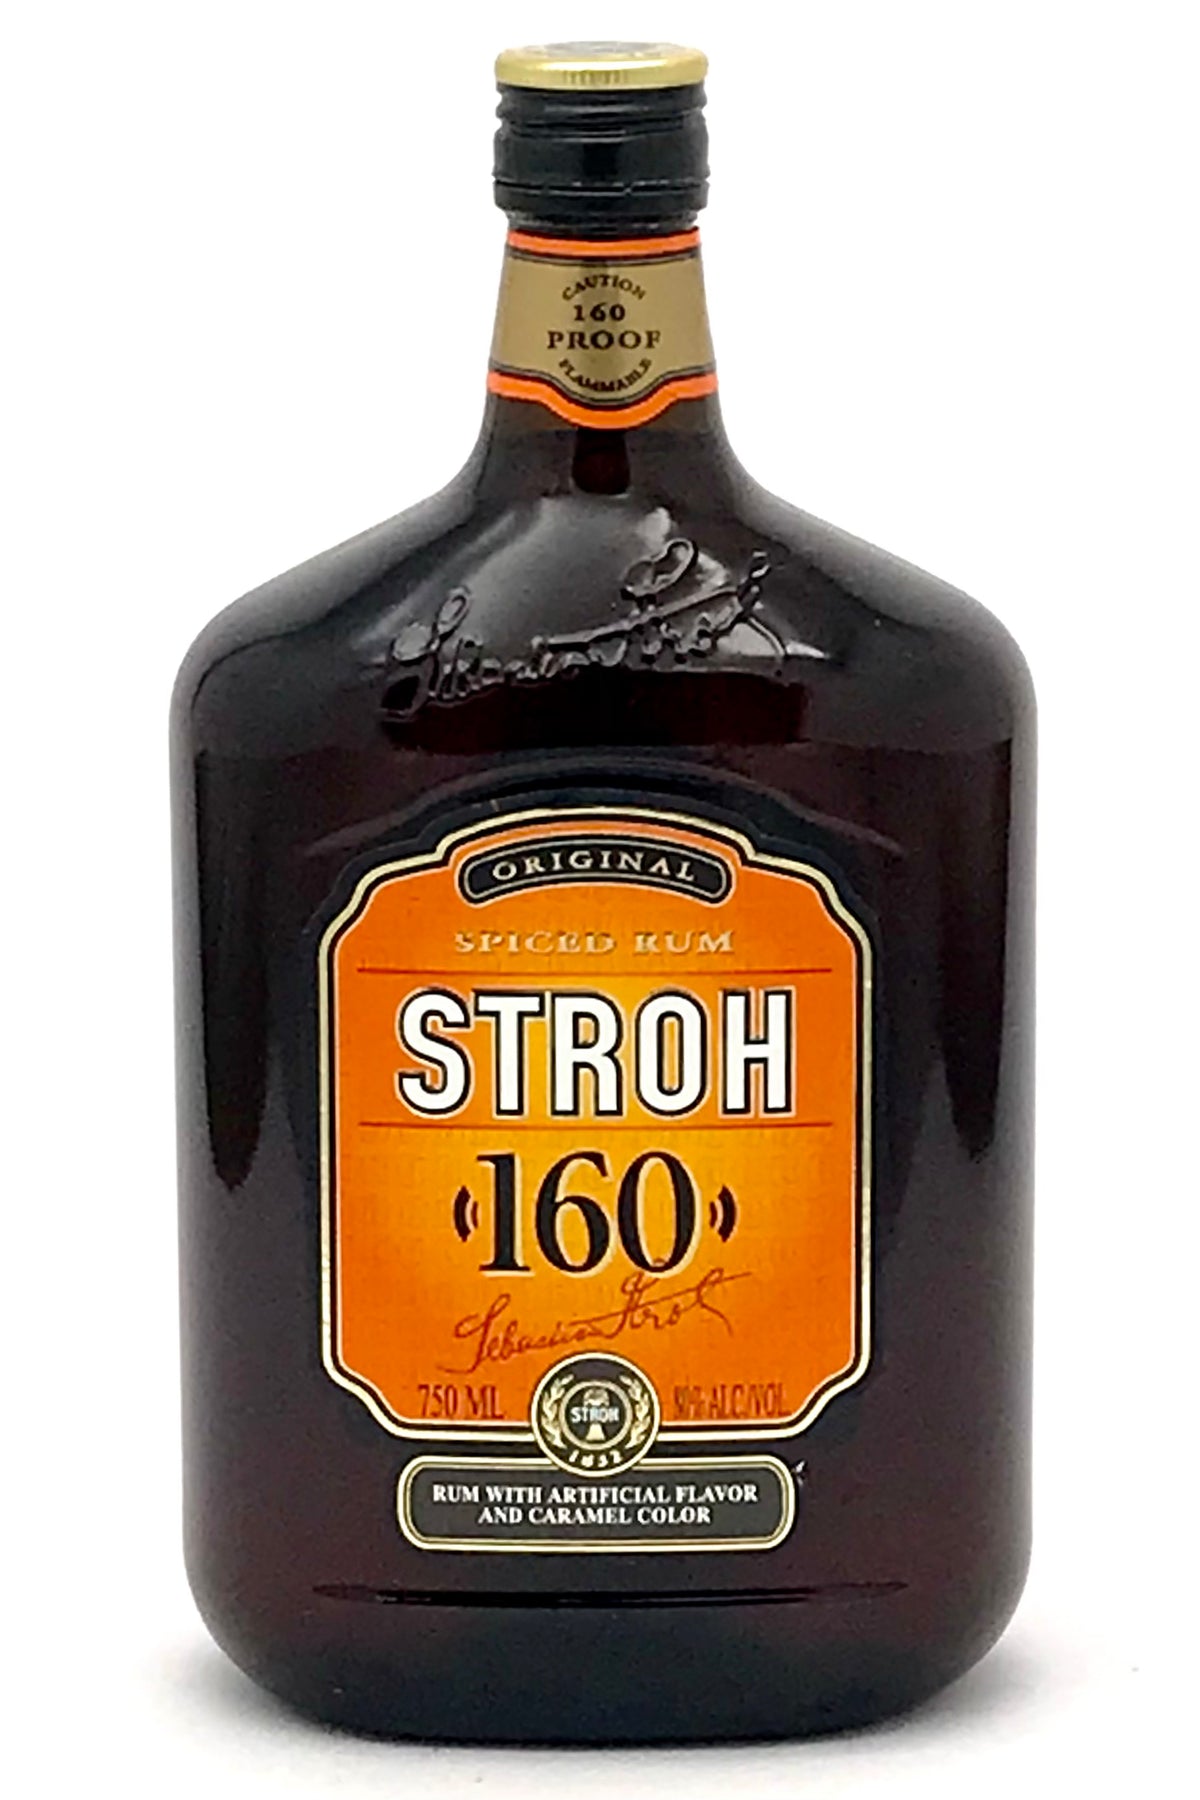 Stroh Original Spiced Rum 160 Proof